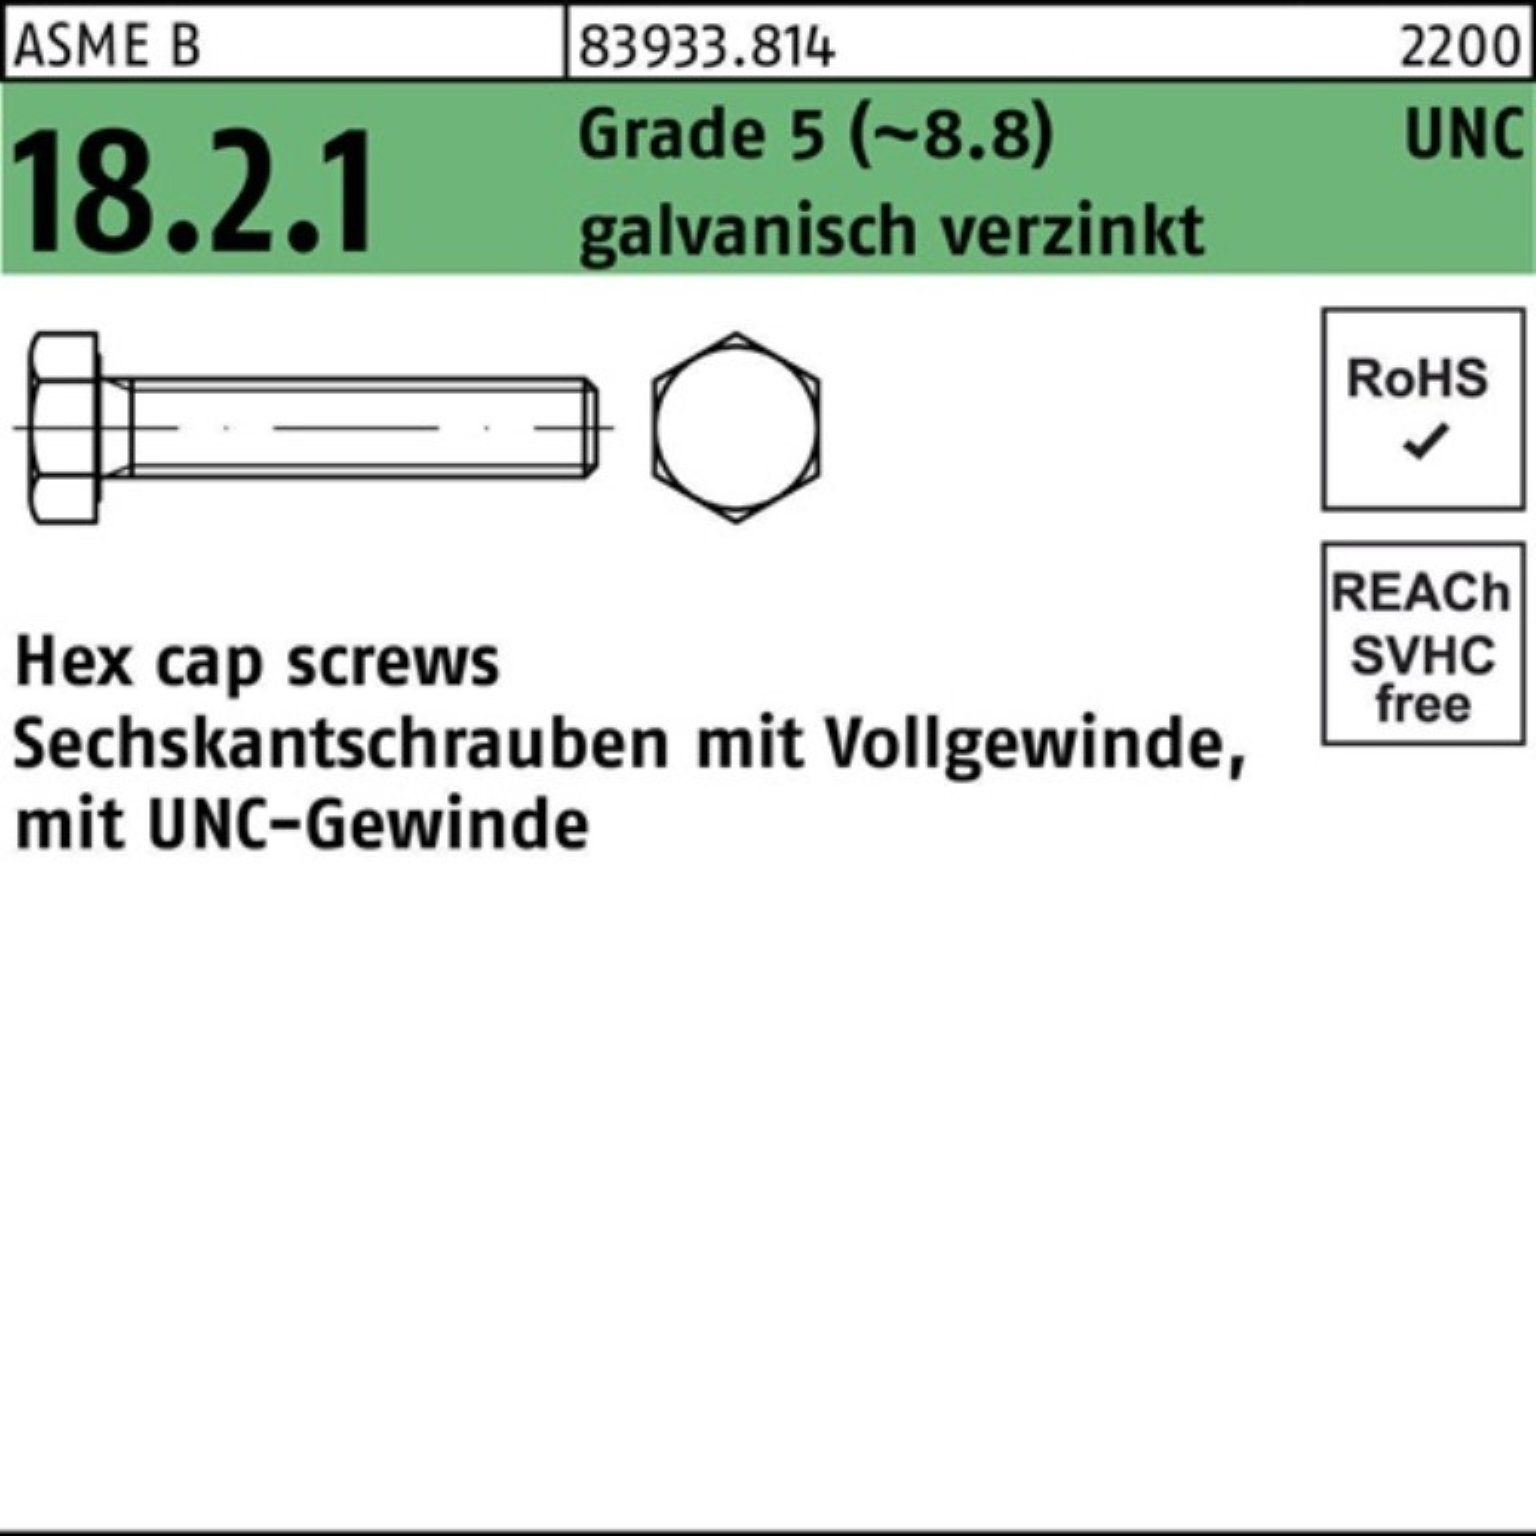 Reyher Sechskantschraube 100er Pack Sechskantschraube R 83933 UNC VG 5/16x1 Grade 5 (8.8) galv